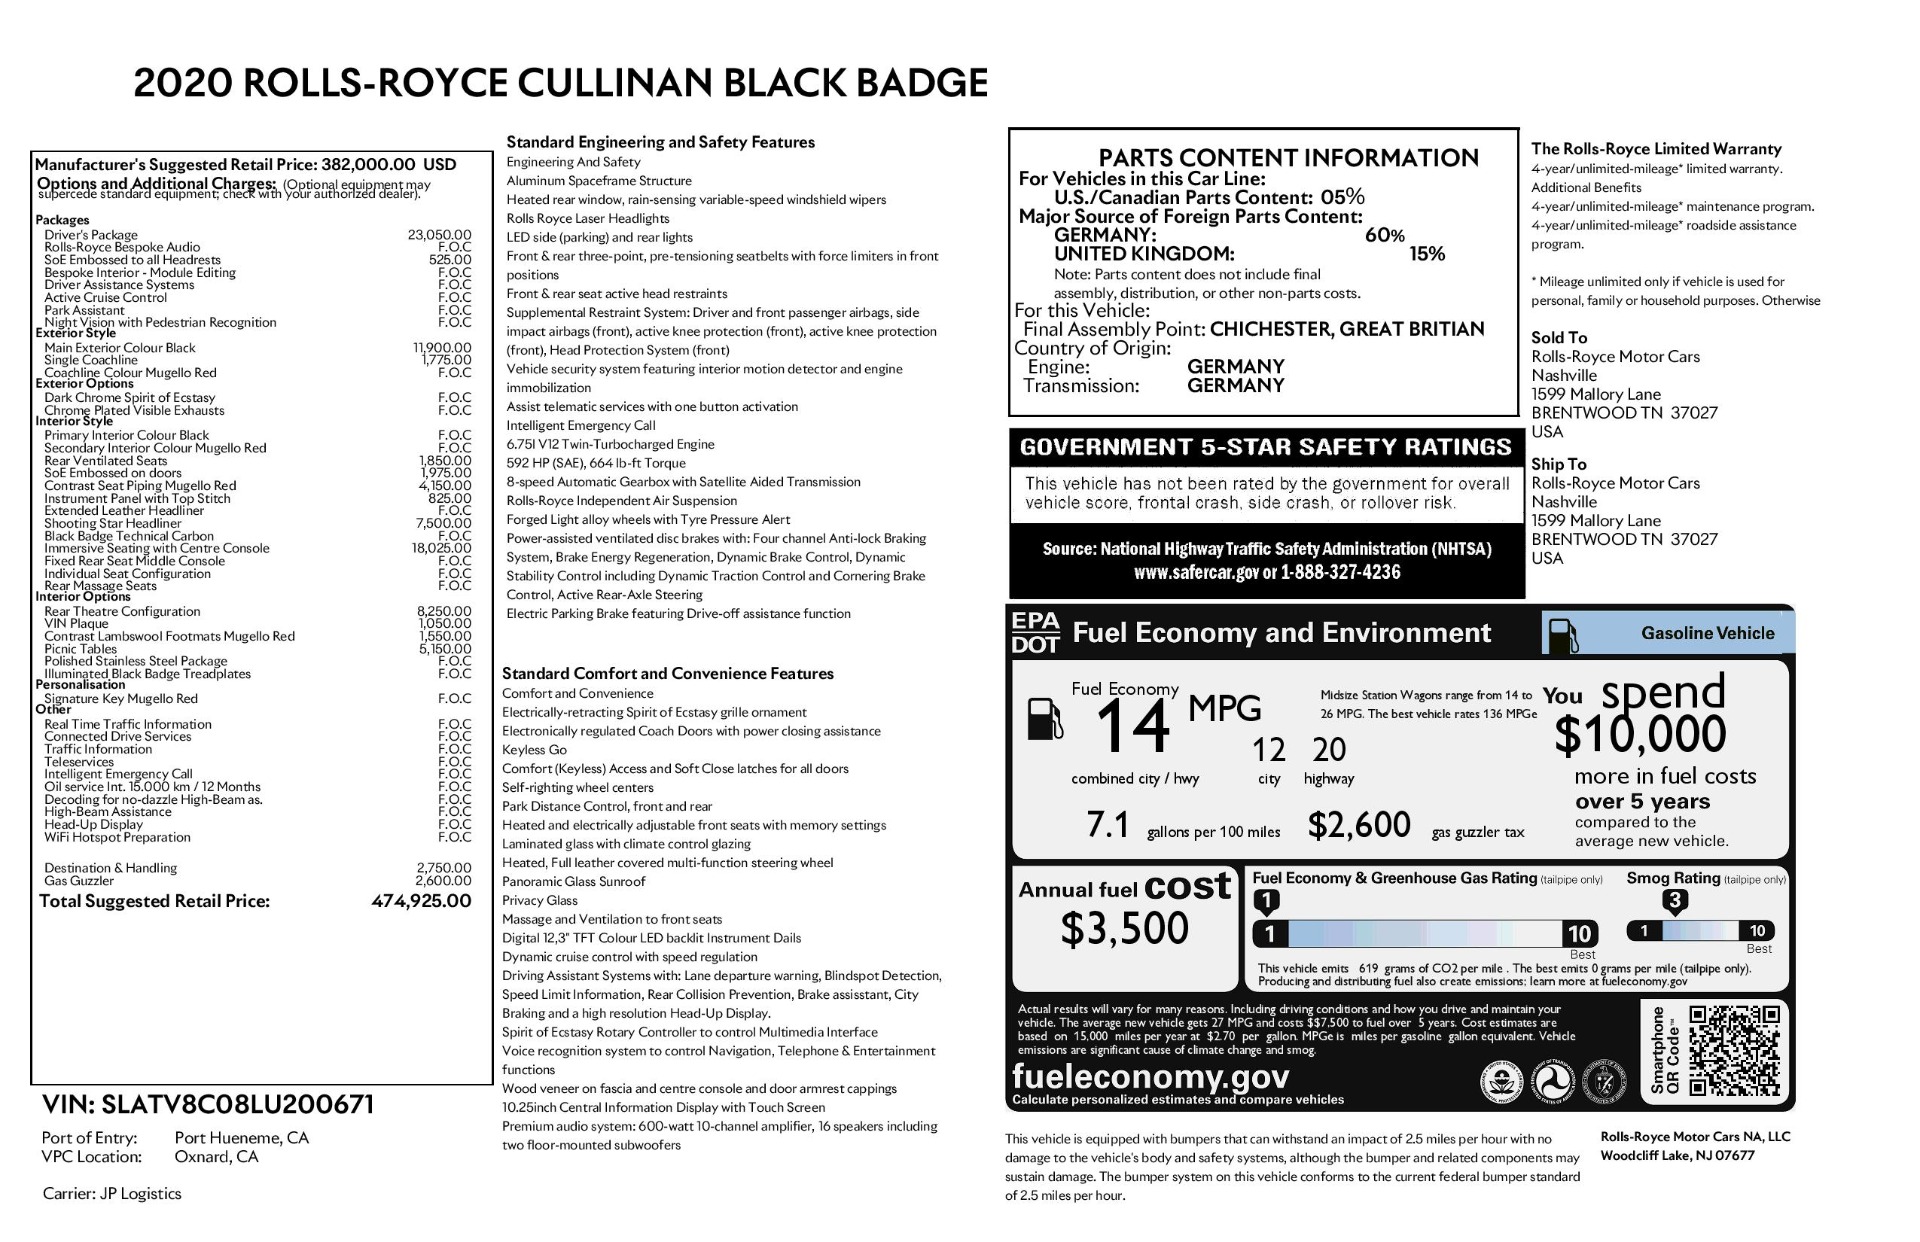 Used 2020 Rolls Royce Black Badge Cullinan